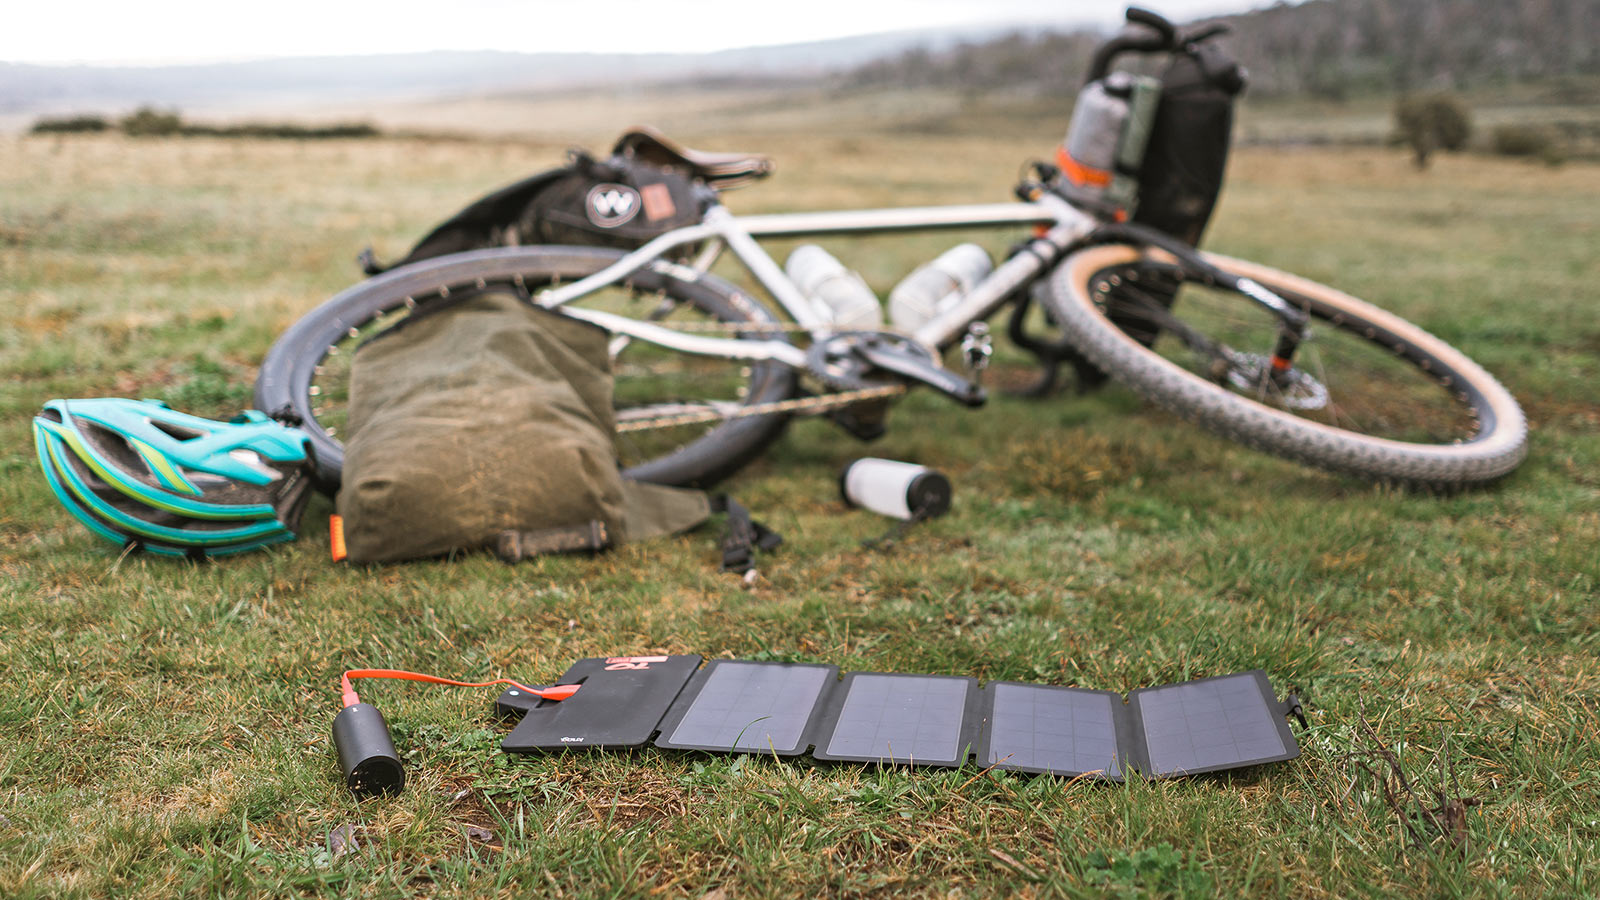 Knog PWR Solar 10W, folding compact photovoltaic panel bikepacking solar charger, bikepacking setup